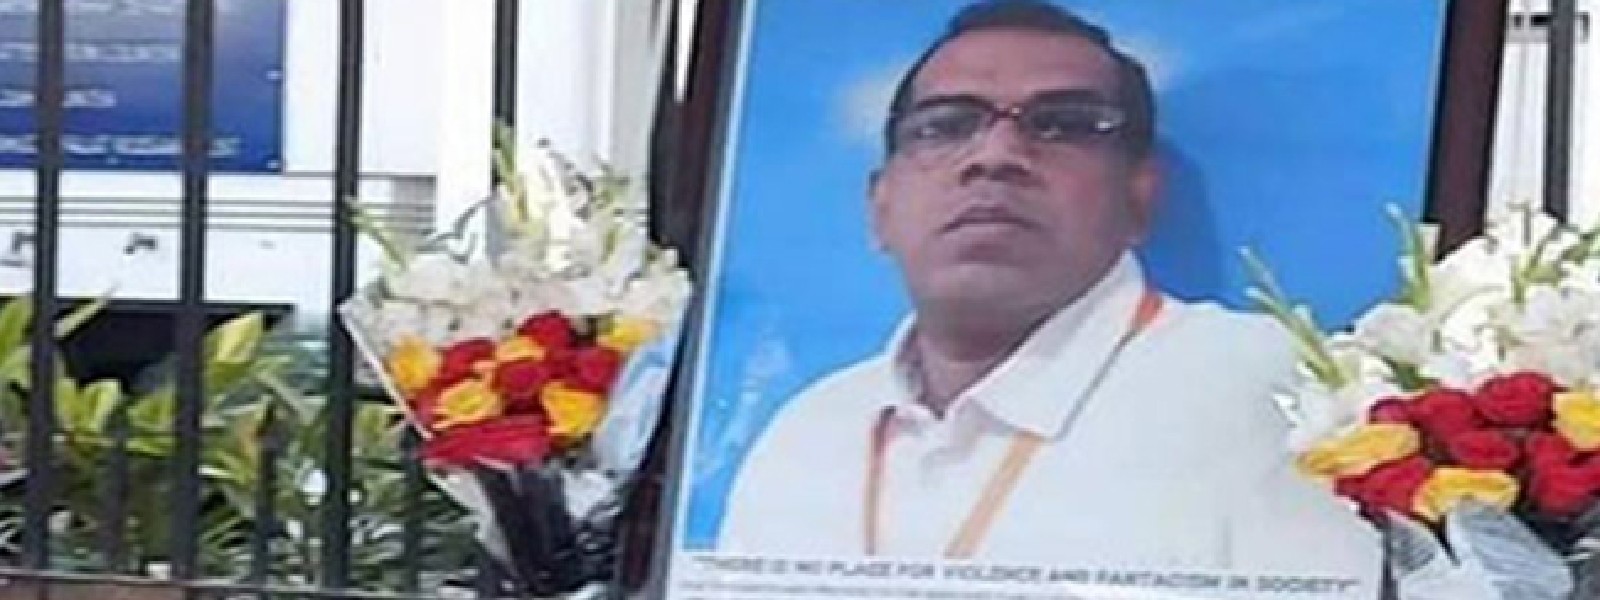 Sialkot factory hires another Sri Lankan for Priyantha Kumara’s position